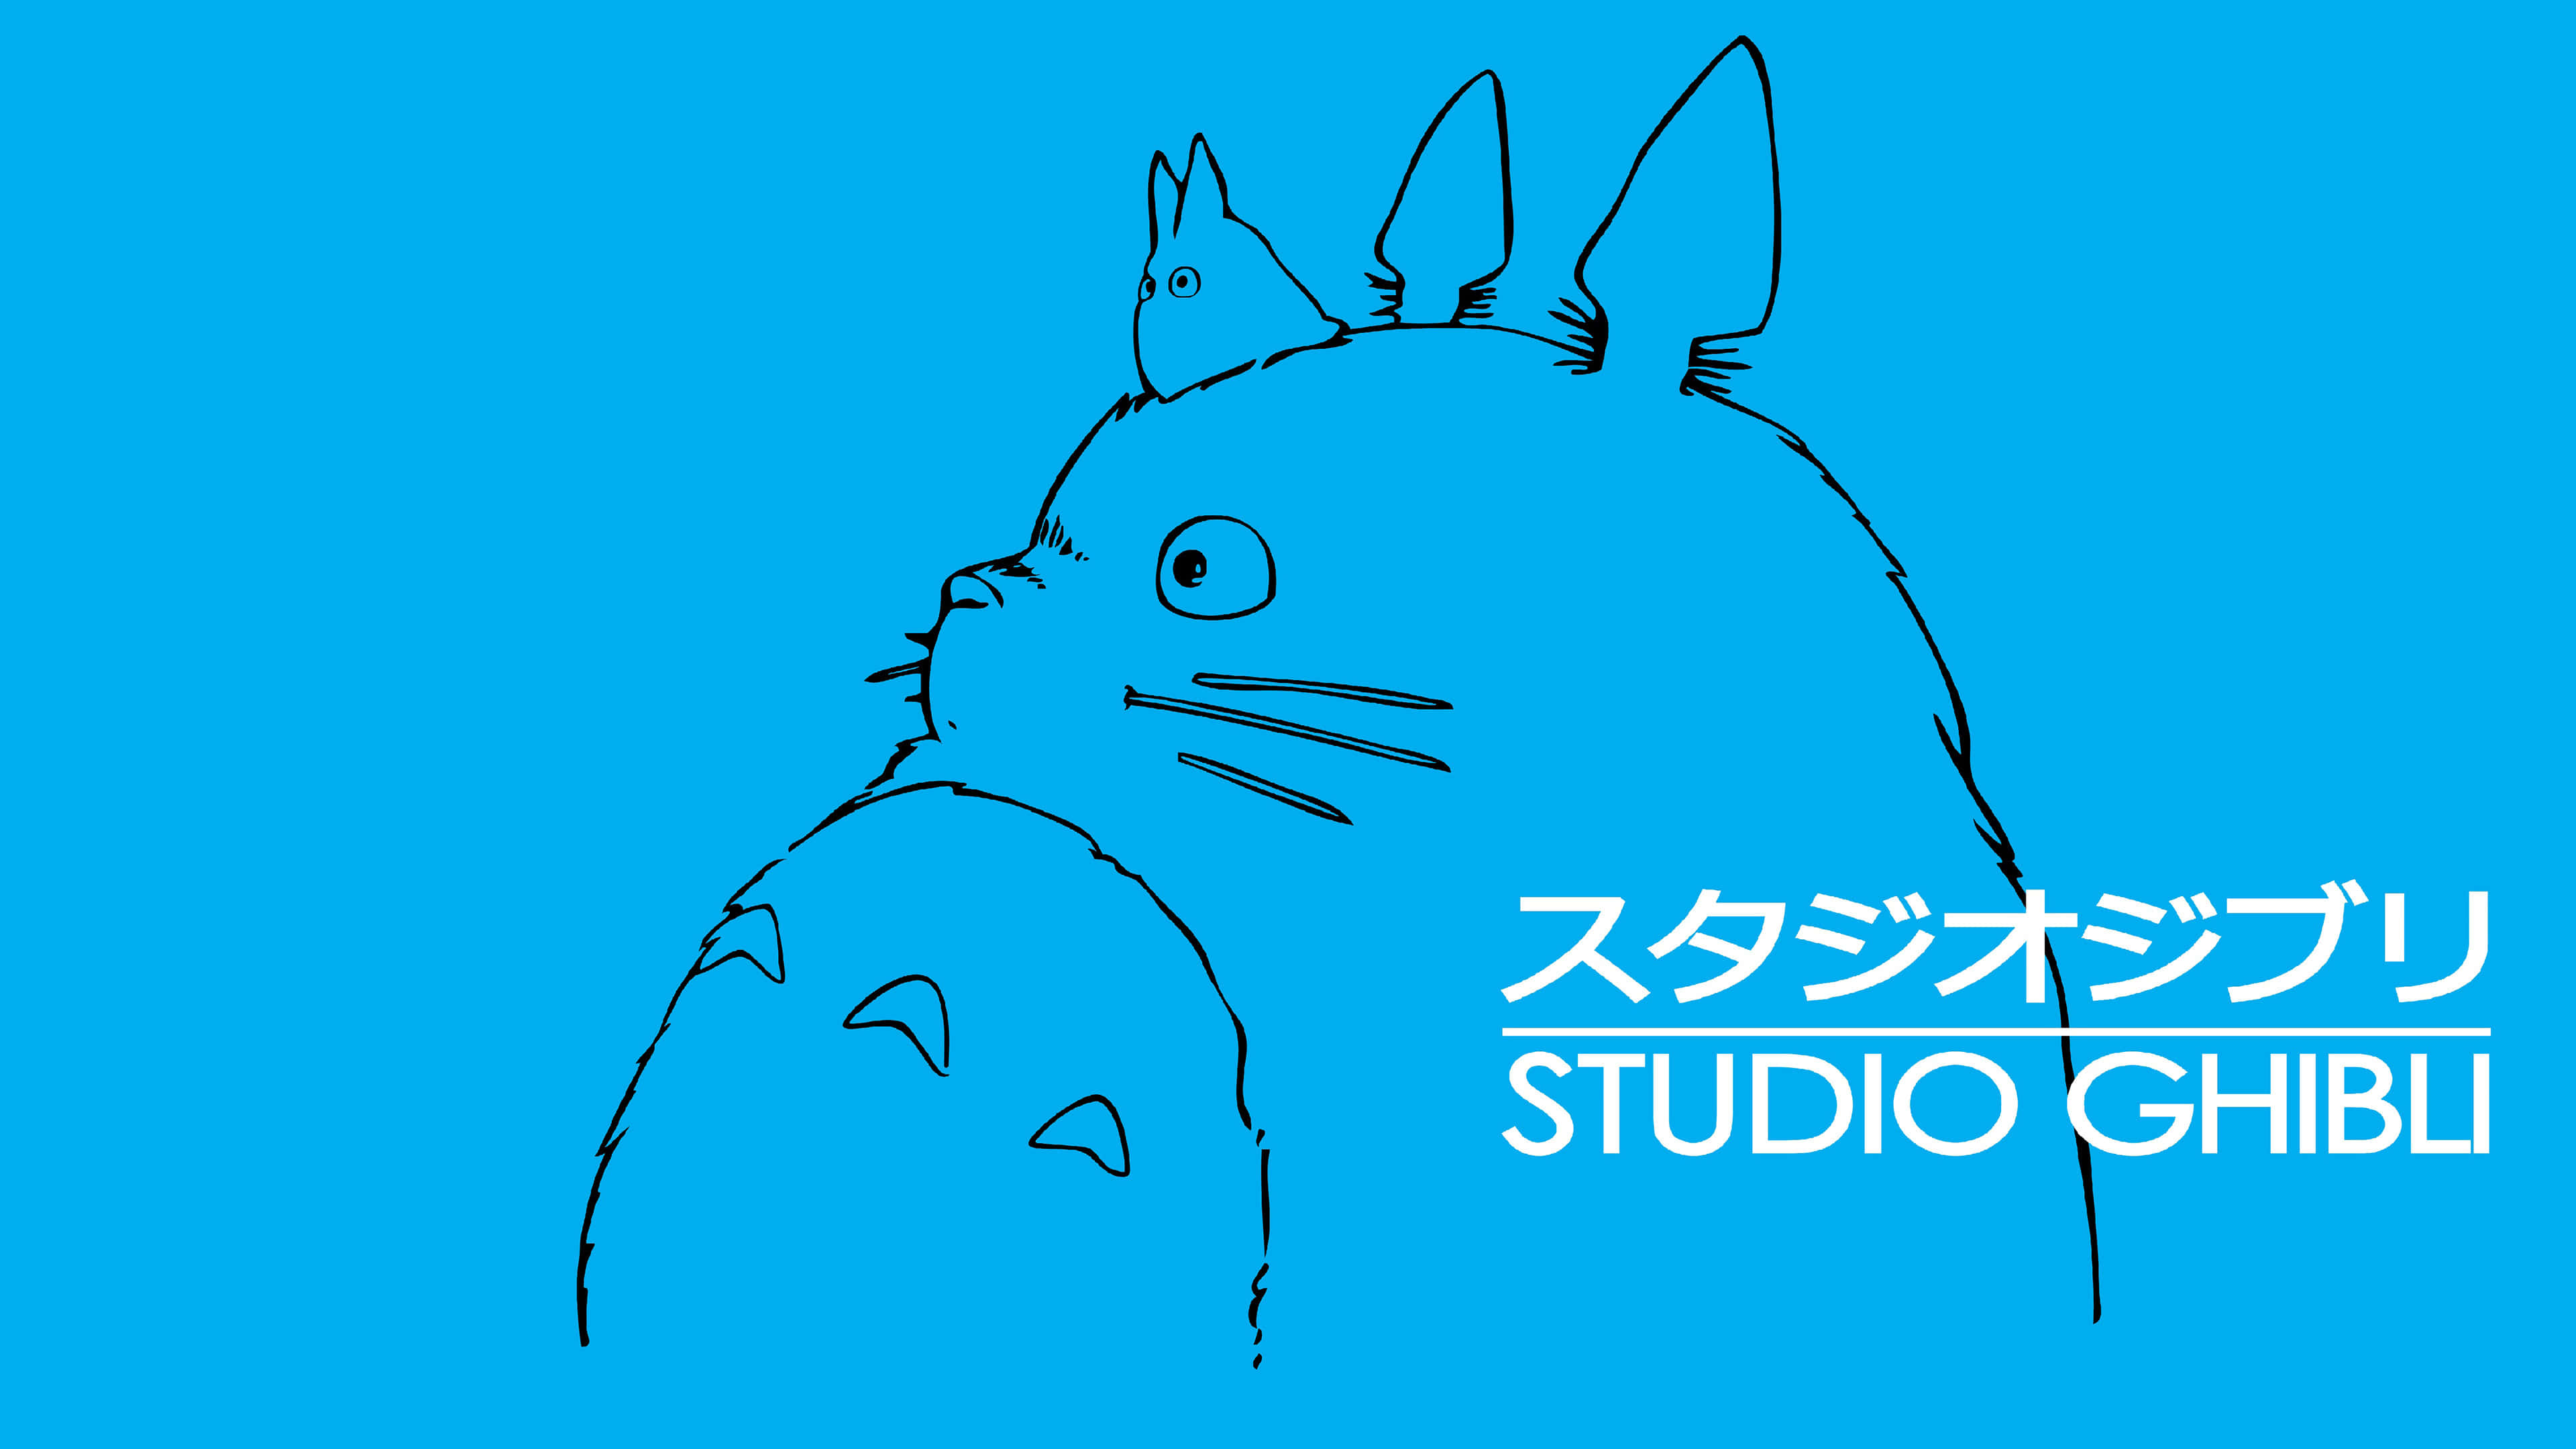 Studio Ghibli Logo UHD 4K Wallpaper